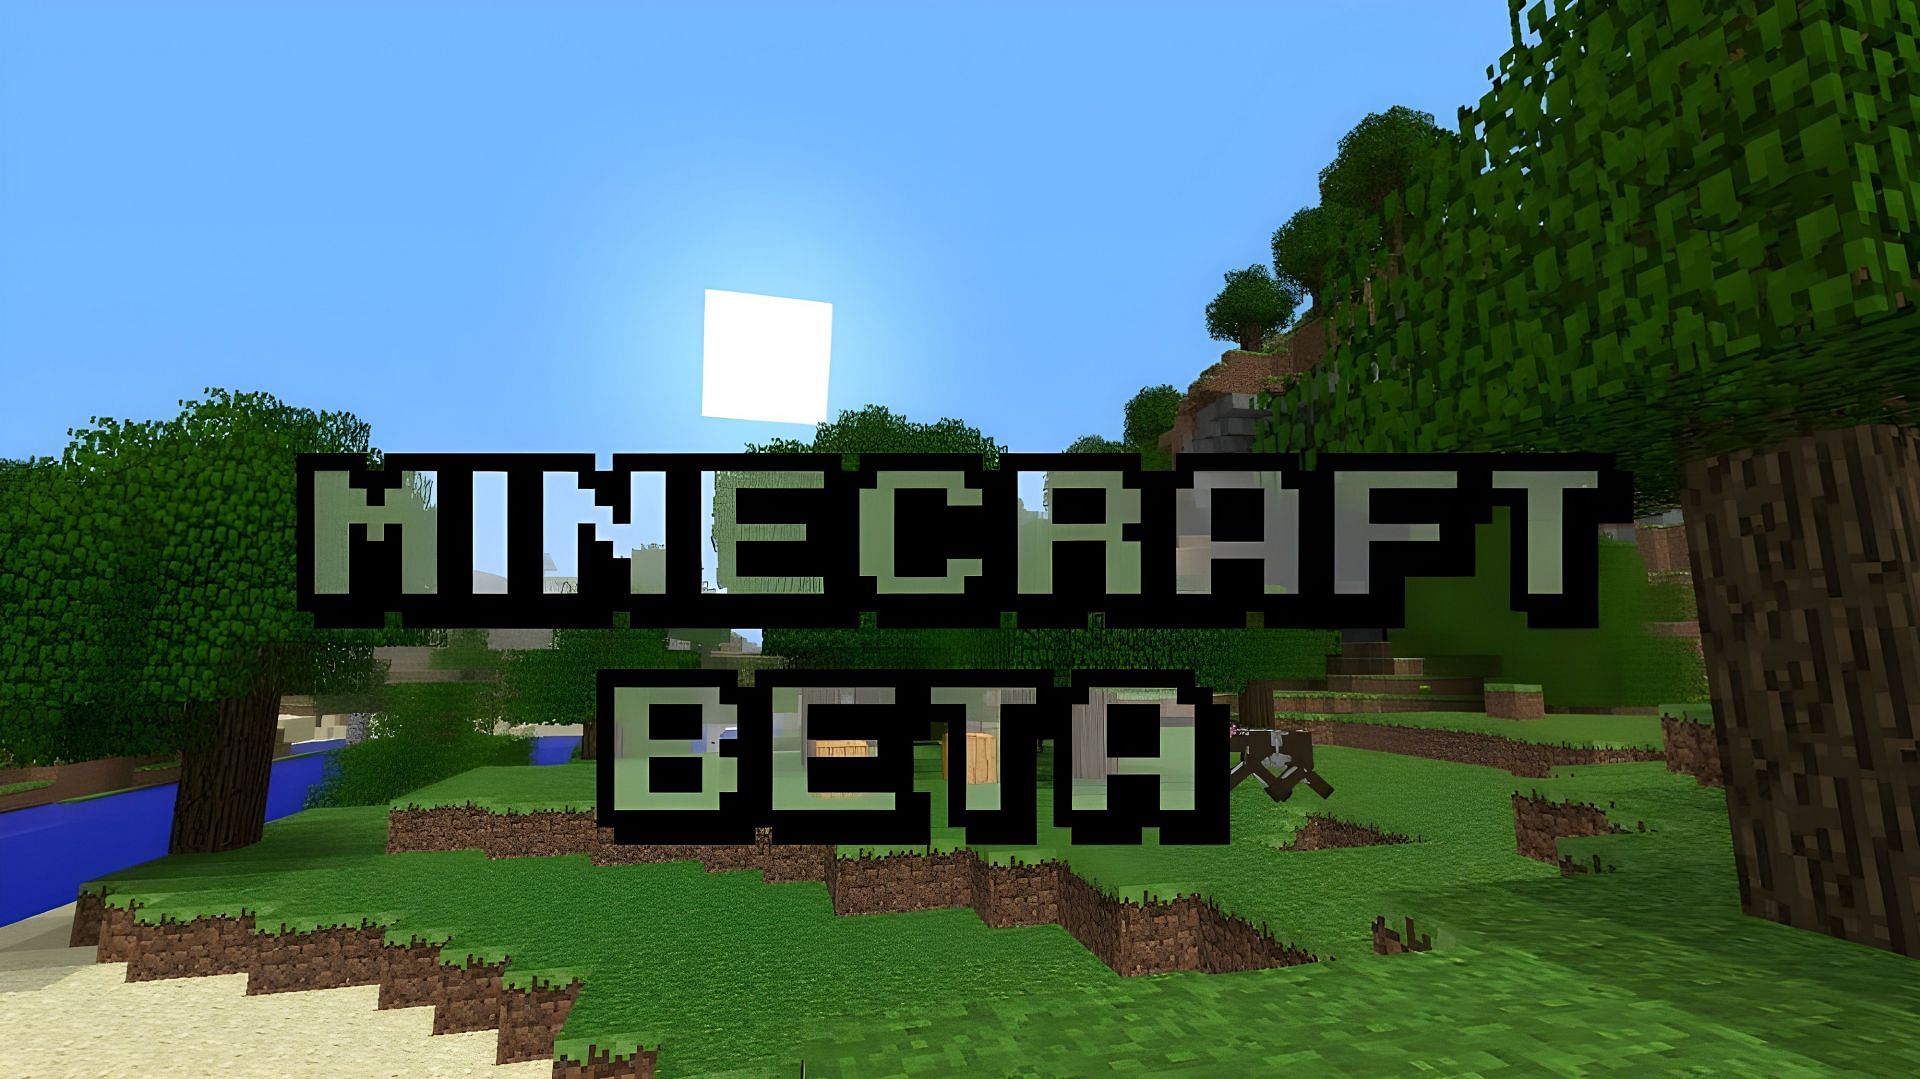 Minecraft Beta servers are amazing (Image via Youtube/Warrior)